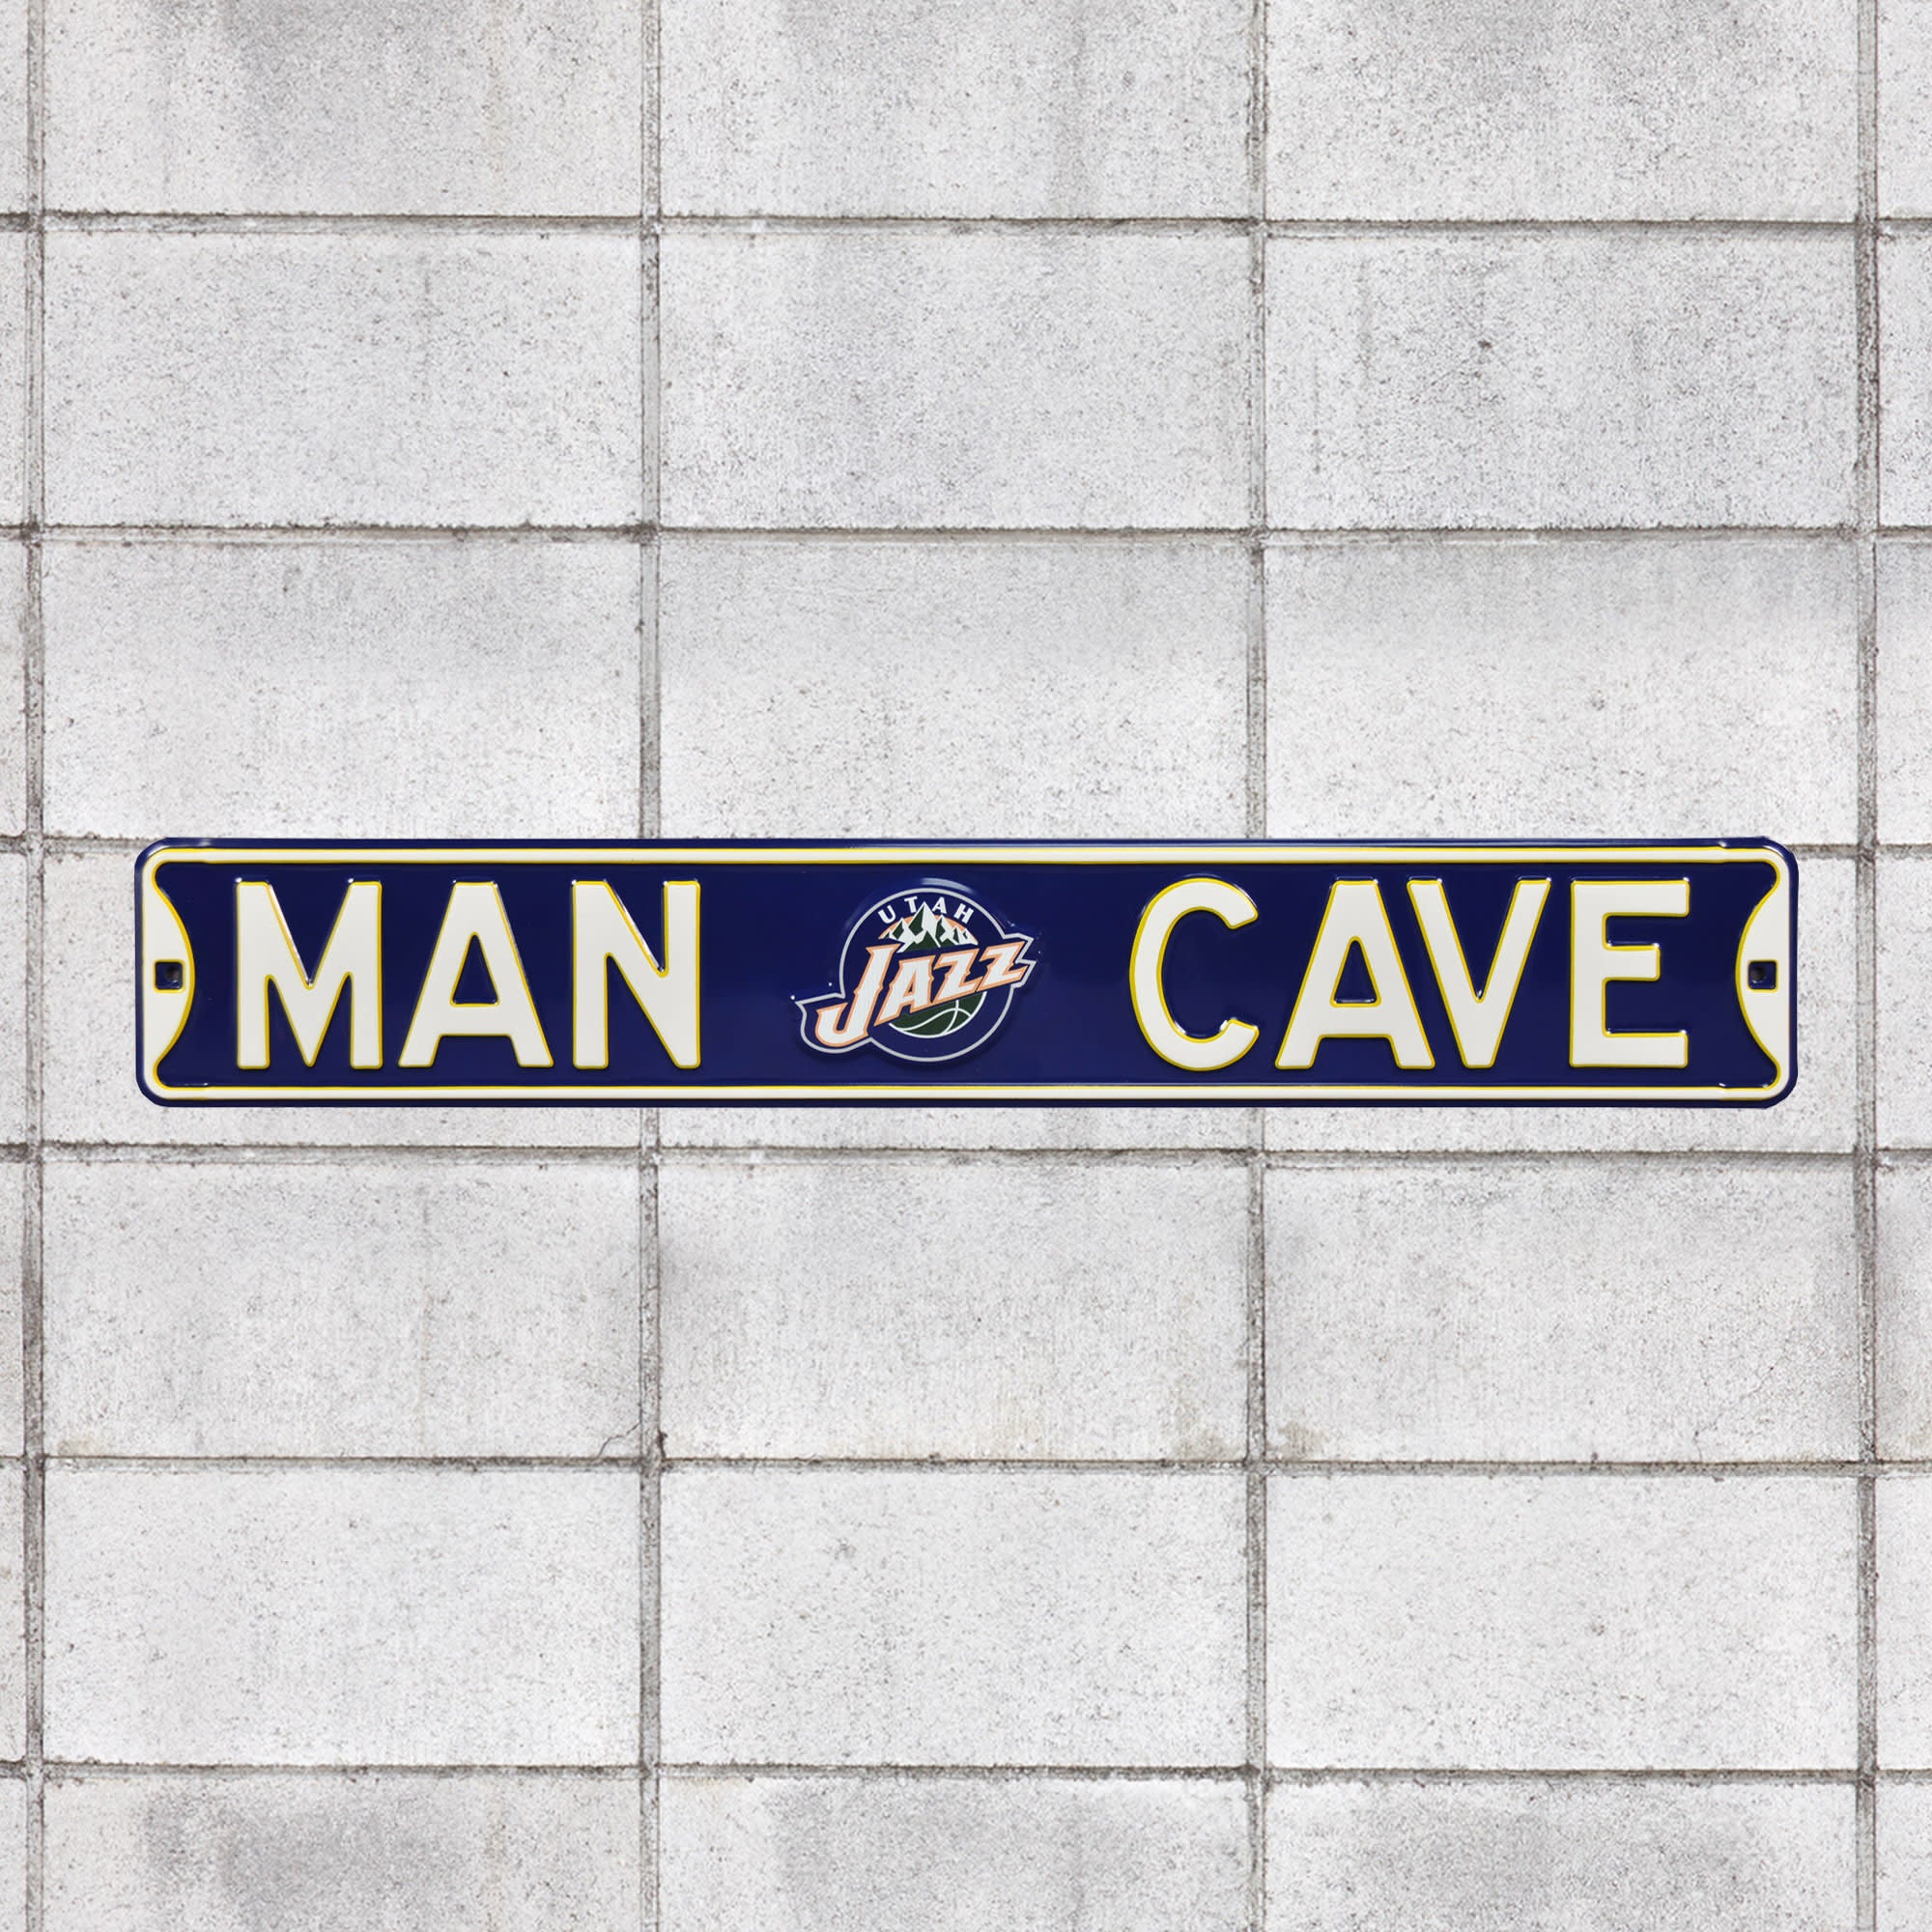 Utah Jazz: Man Cave - Officially Licensed NBA Metal Street Sign by Fathead | 100% Steel